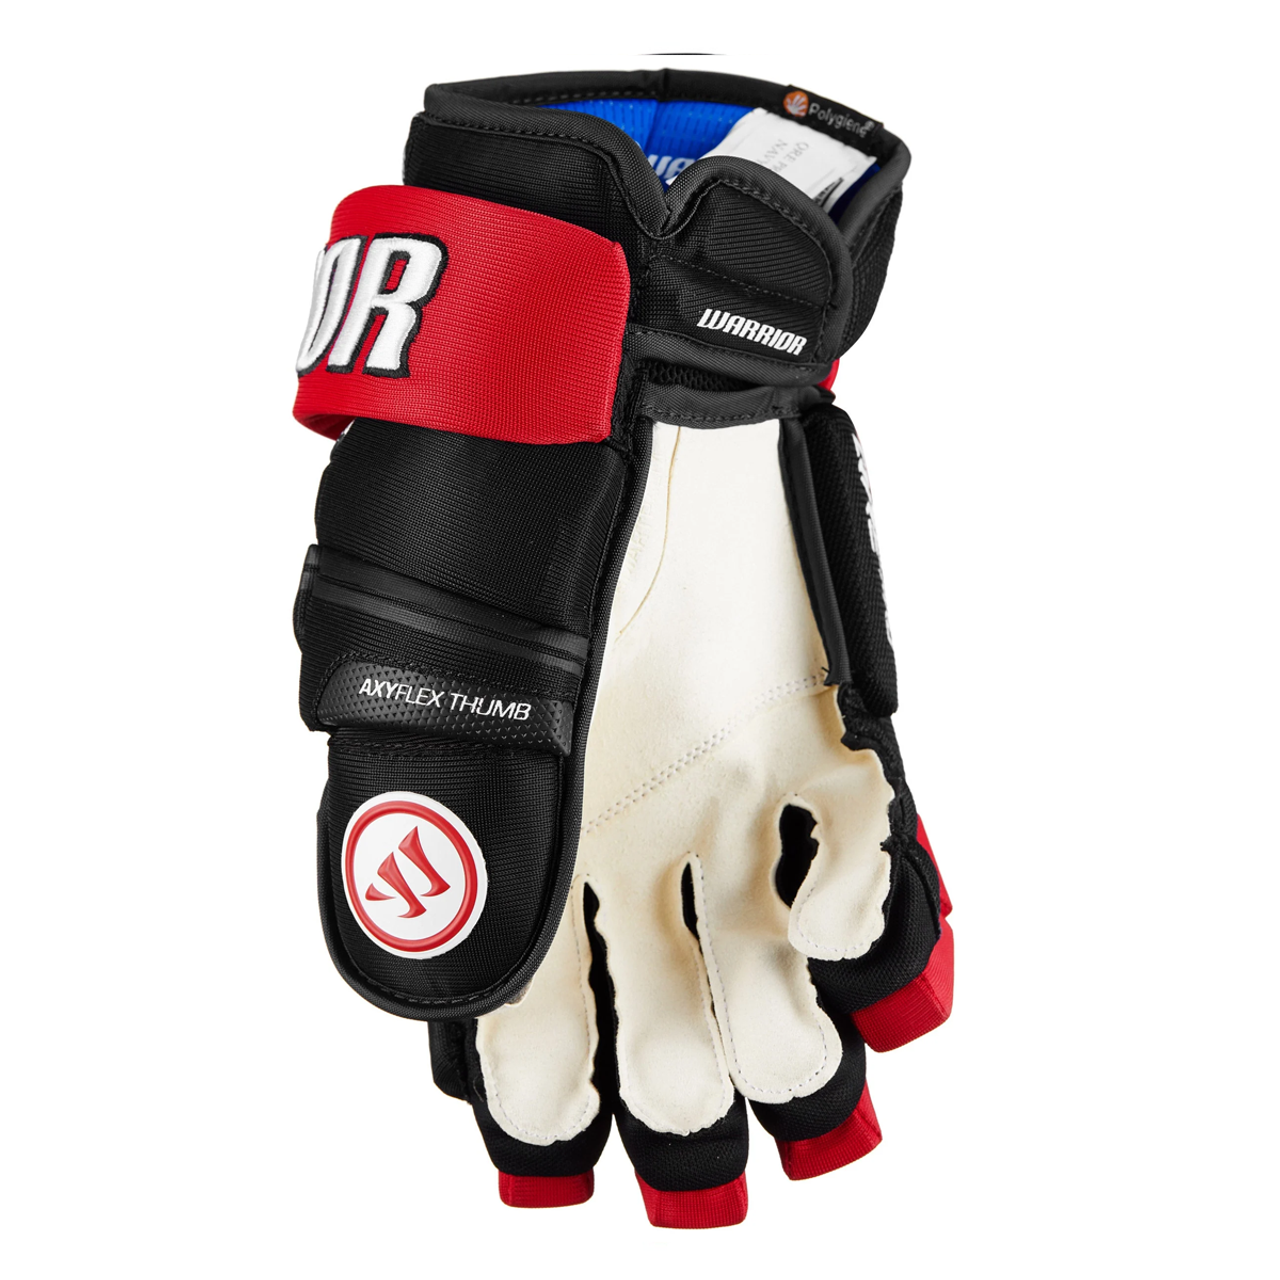 Warrior Covert Qre3 Senior Ice Hockey Player Gloves 14" Inch SR Black Yellow for sale online 